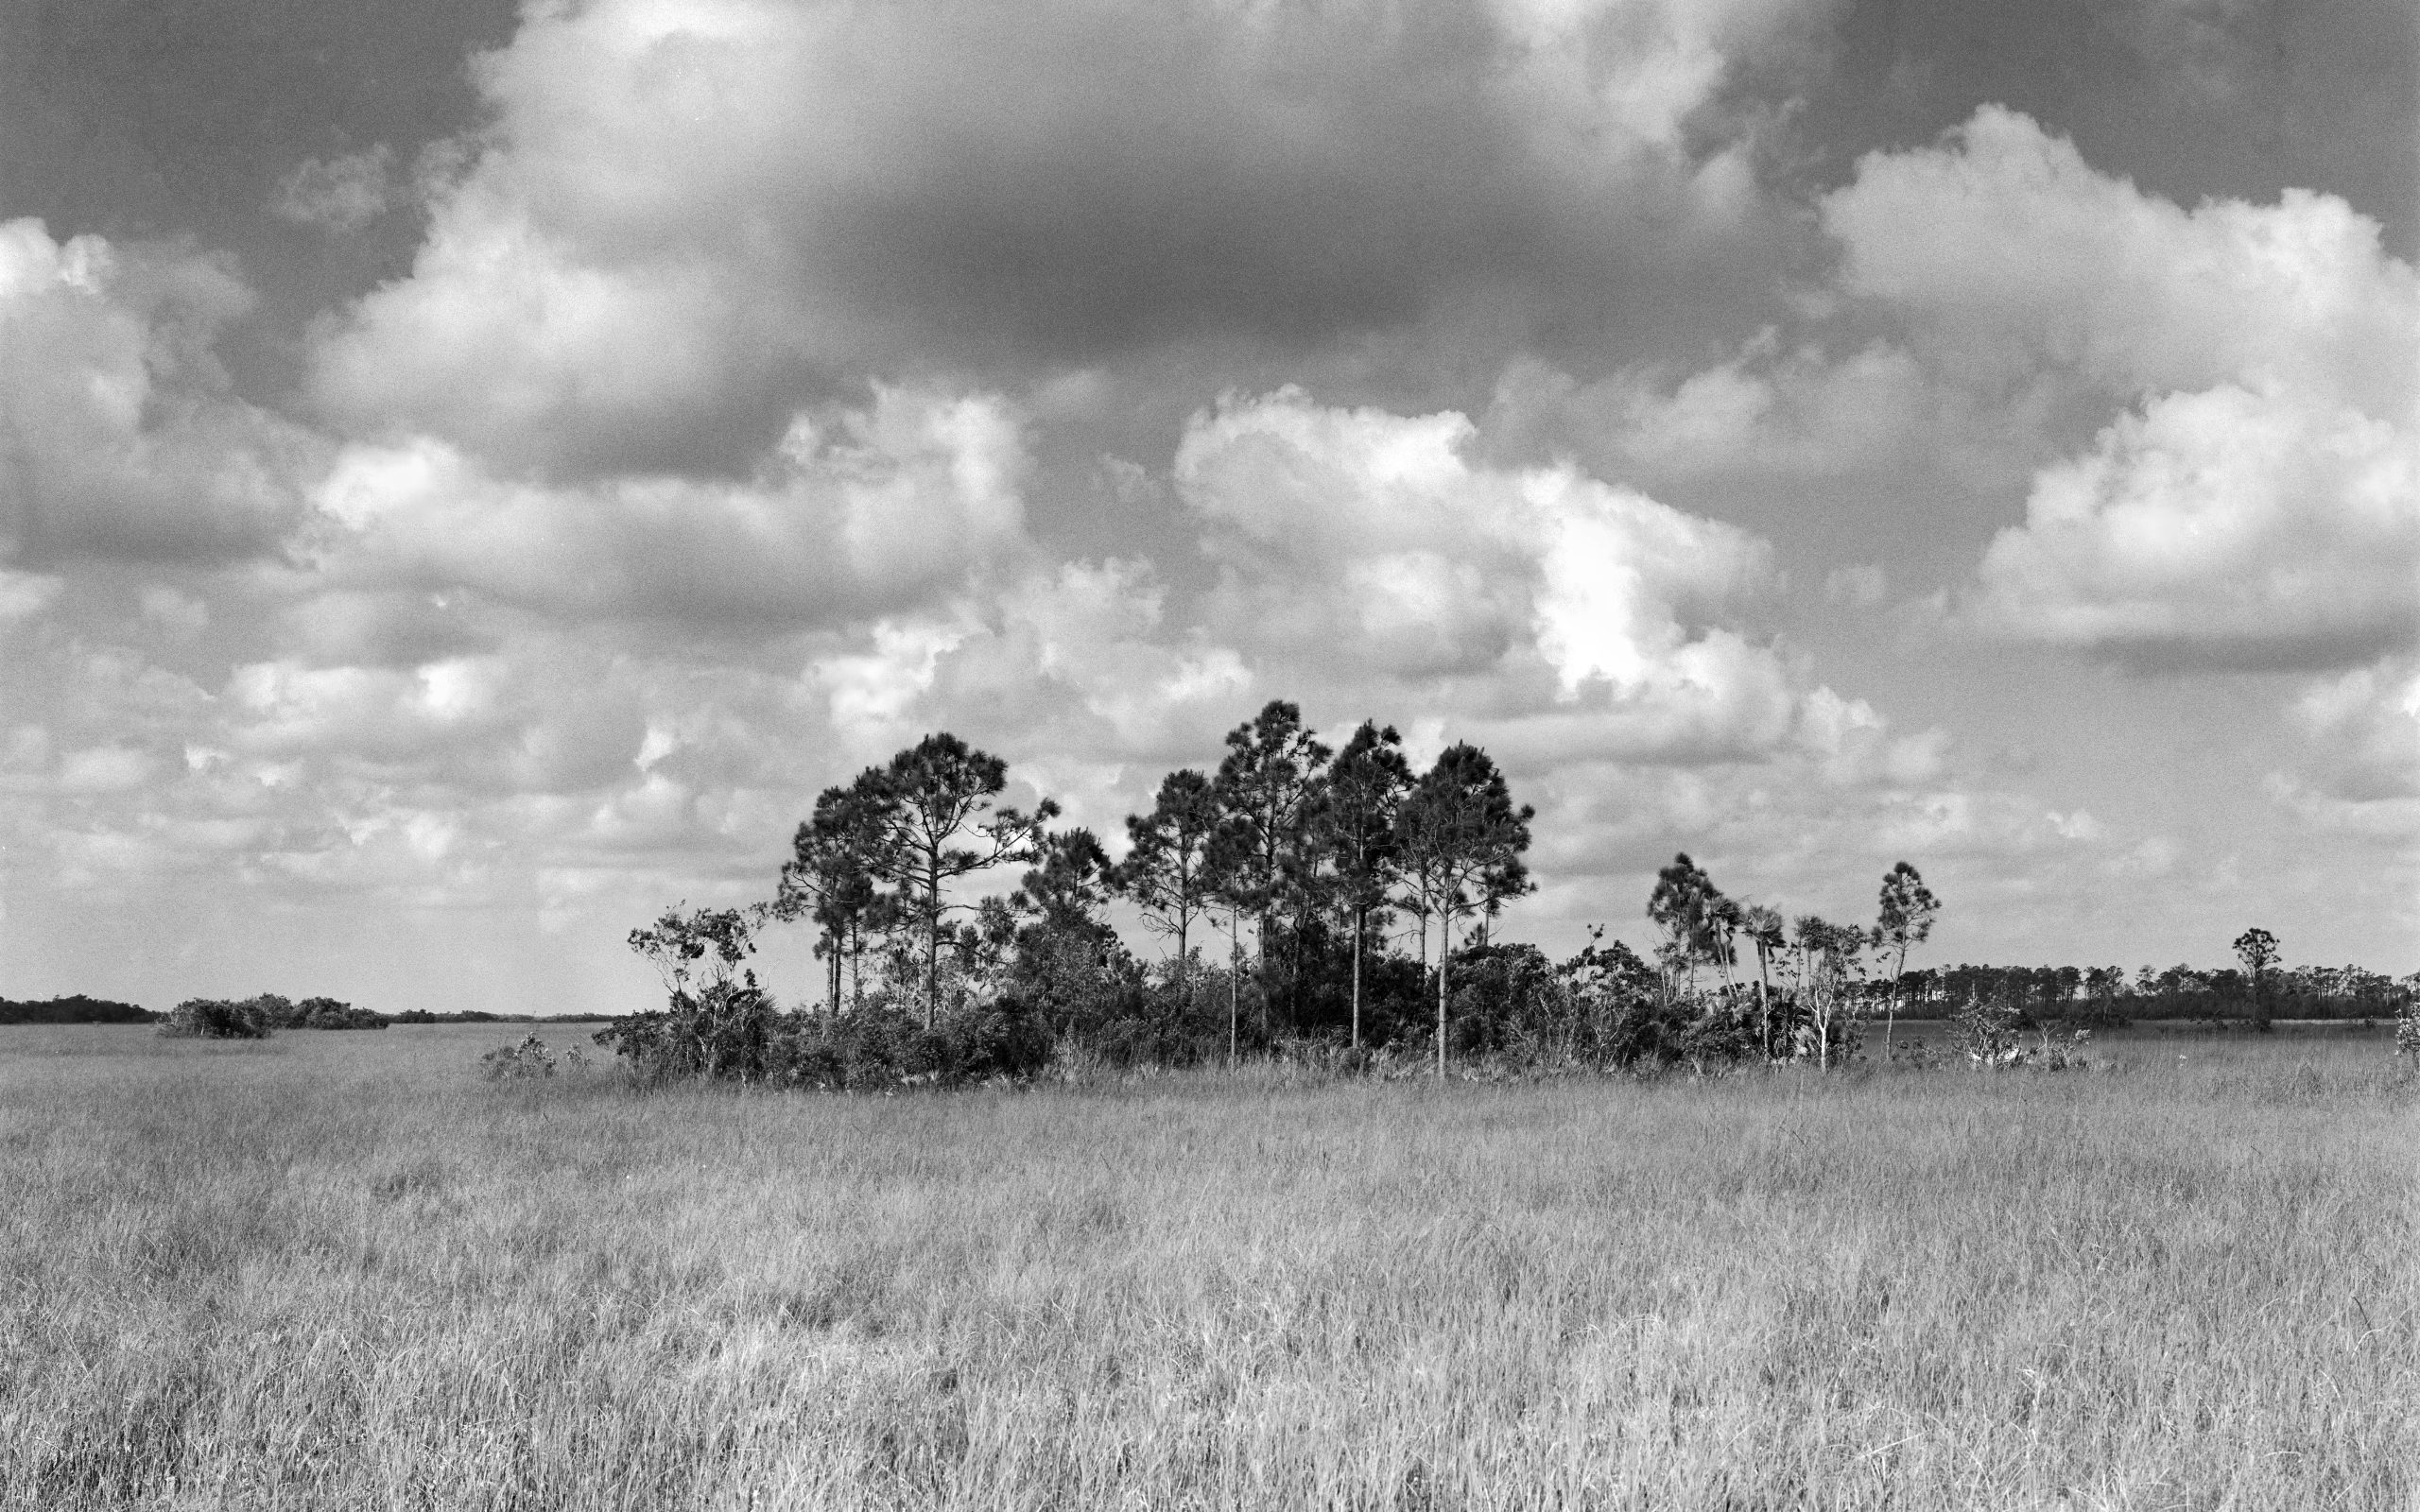 Slash Pine Island in the Shark River Slough in the Everglades National Park, FL. Captured on Film